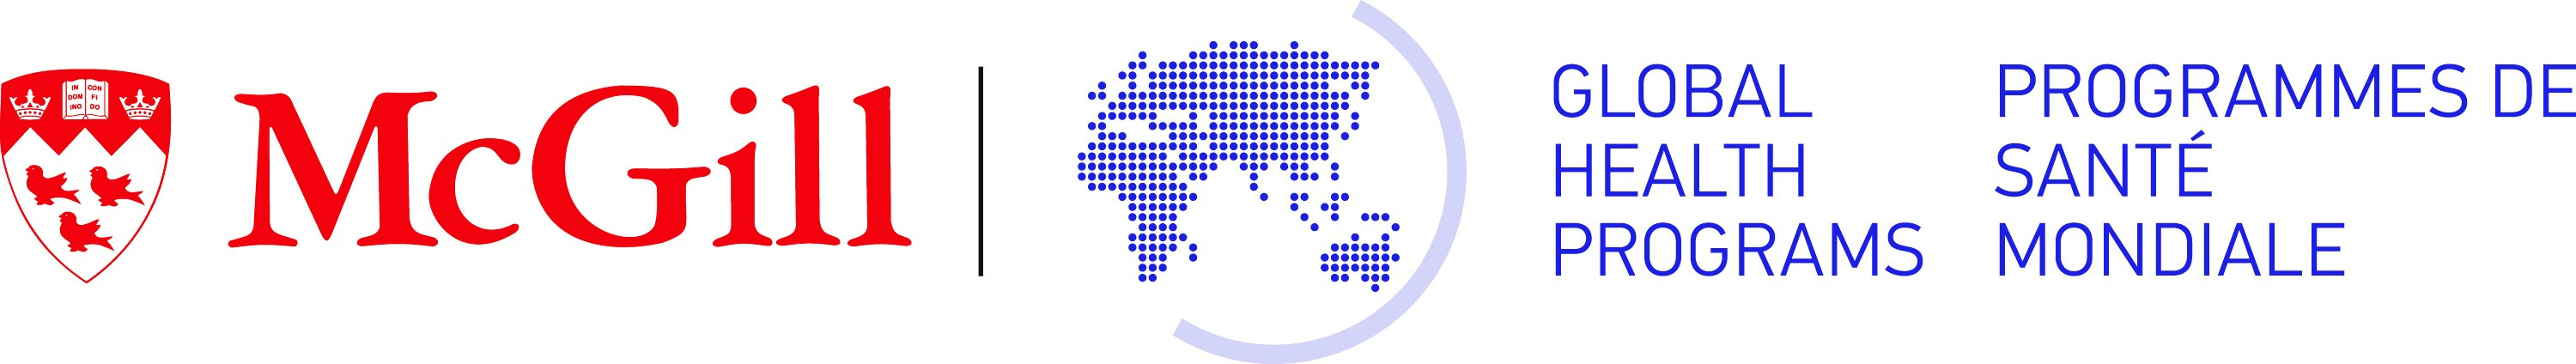 McGill Global Health Programs logo